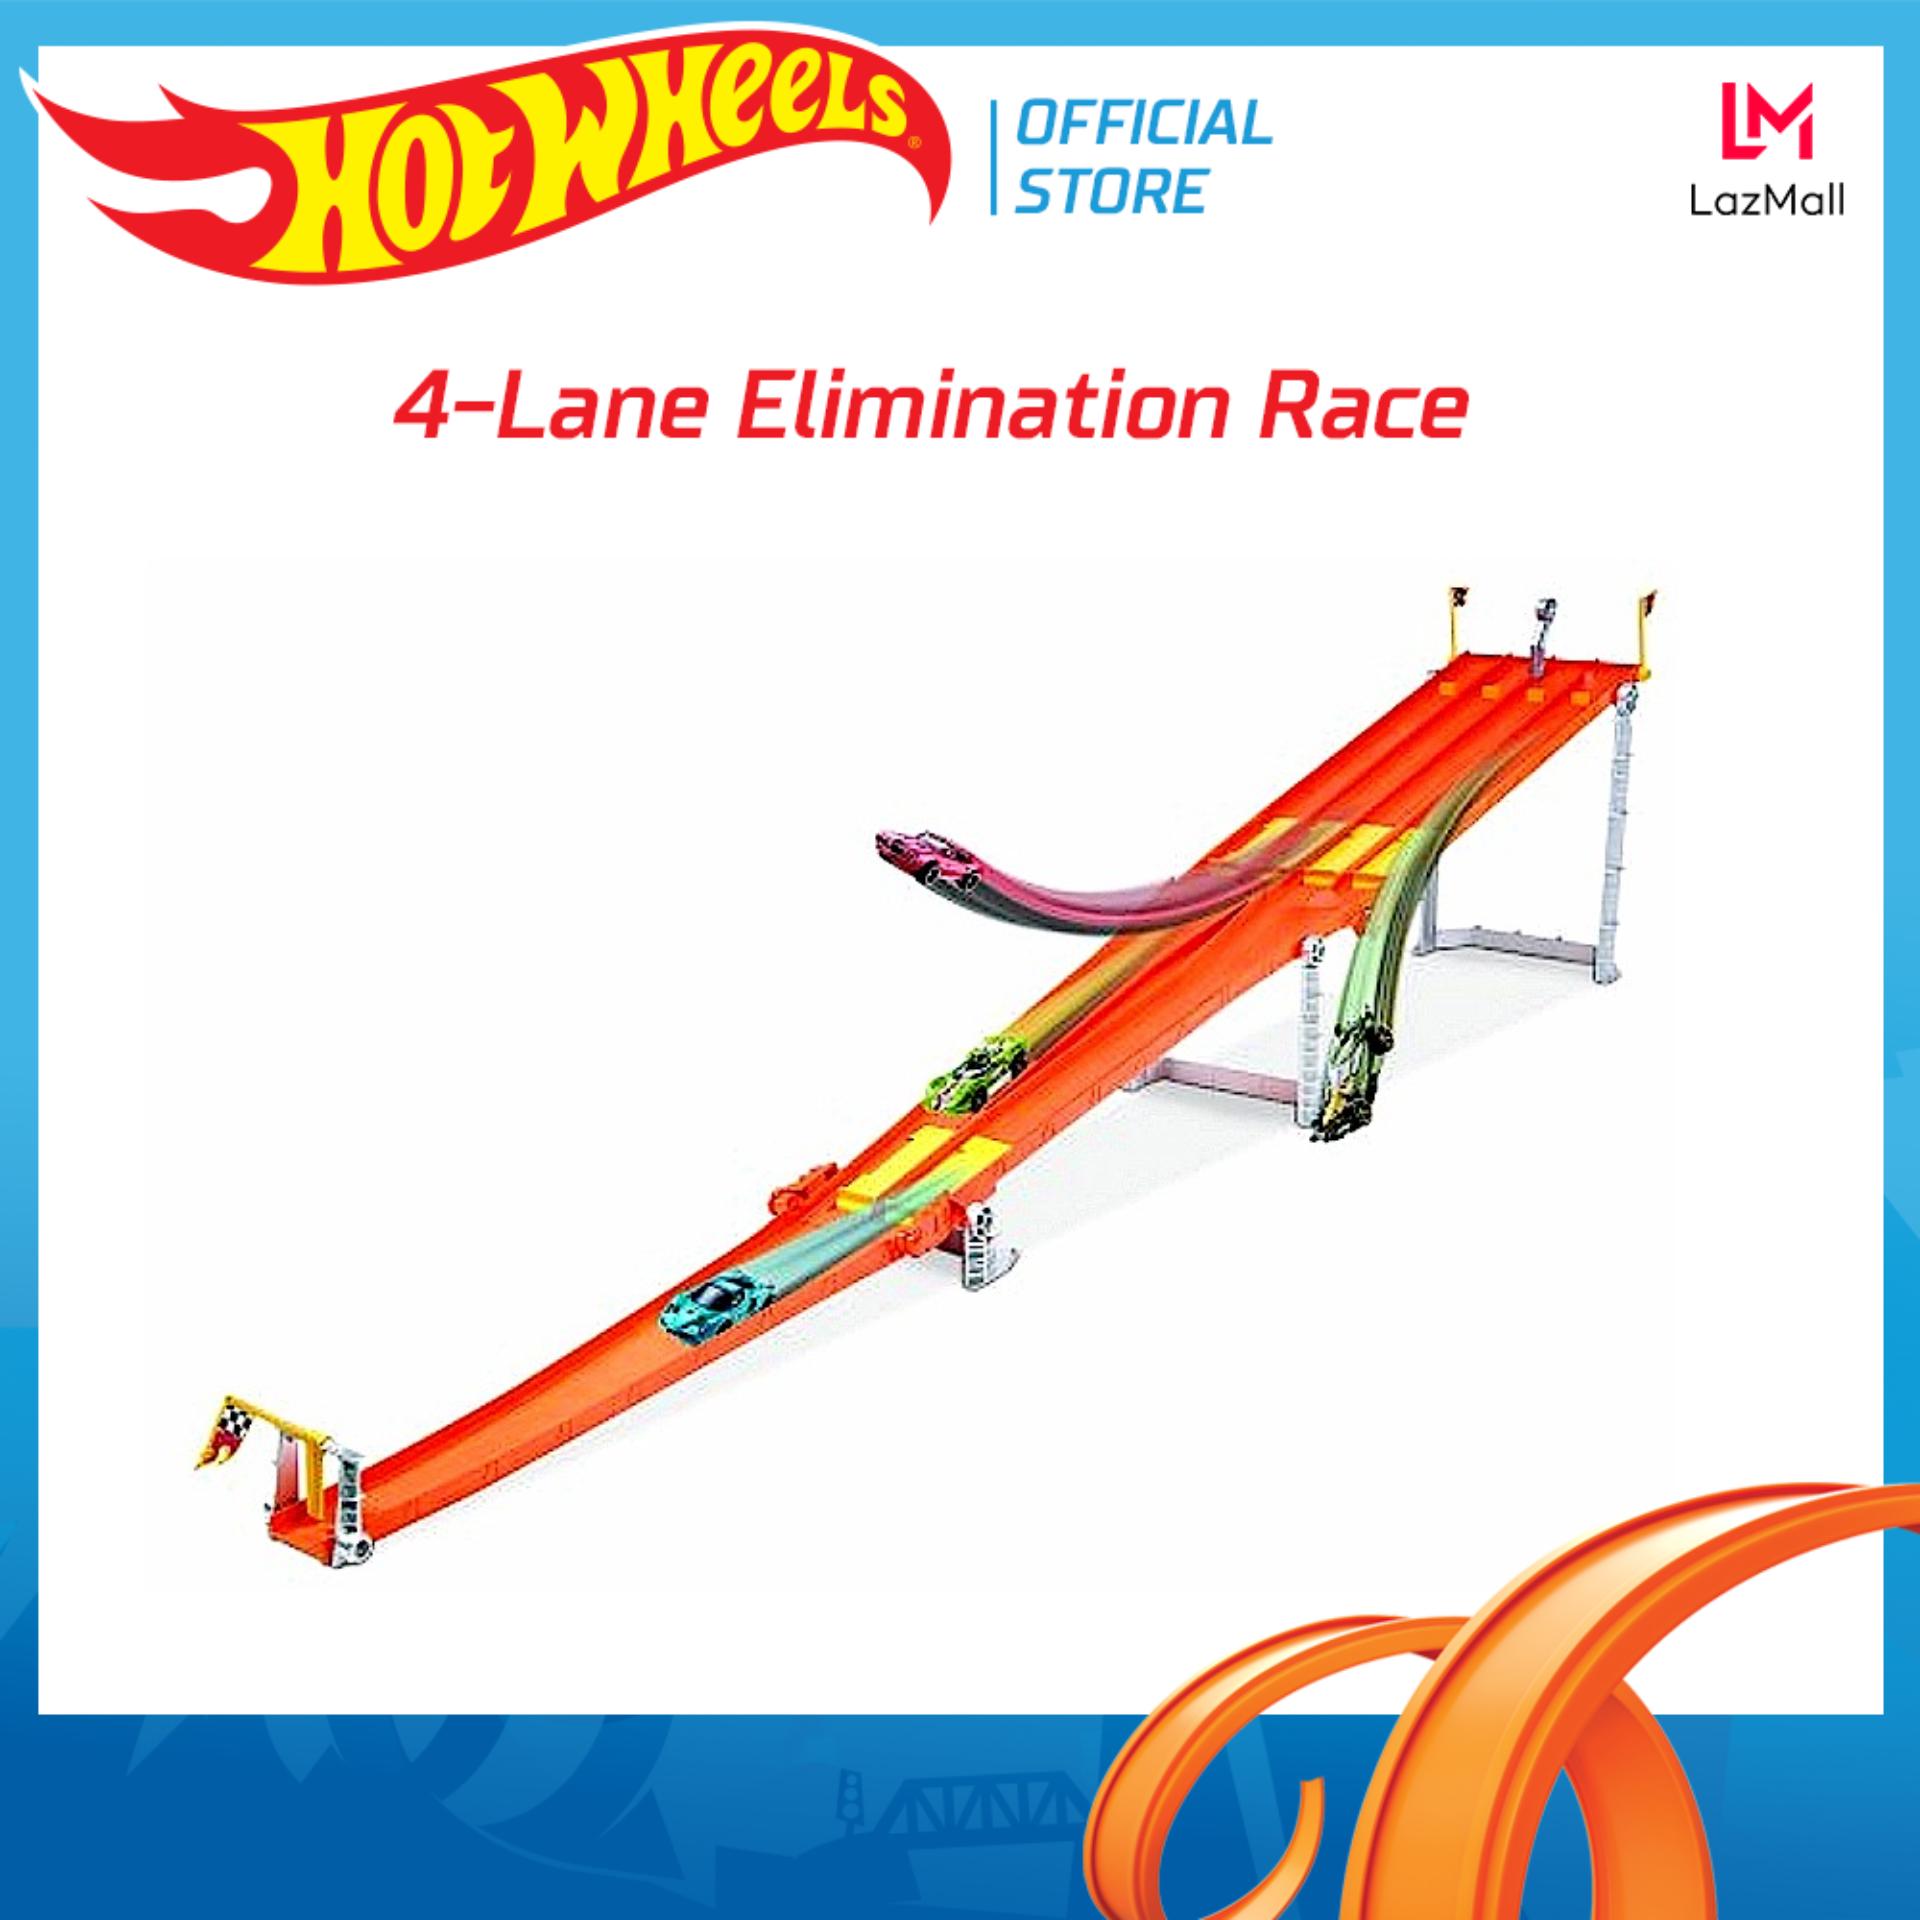 Hot Wheels ฮ็อทวีล 4-lane Elimination Race Track Set GDY60 ชุดรางแข่งยกระดับ โมเดลรถ พาหนะจำลอง ของเล่นสะสม รถของเล่น